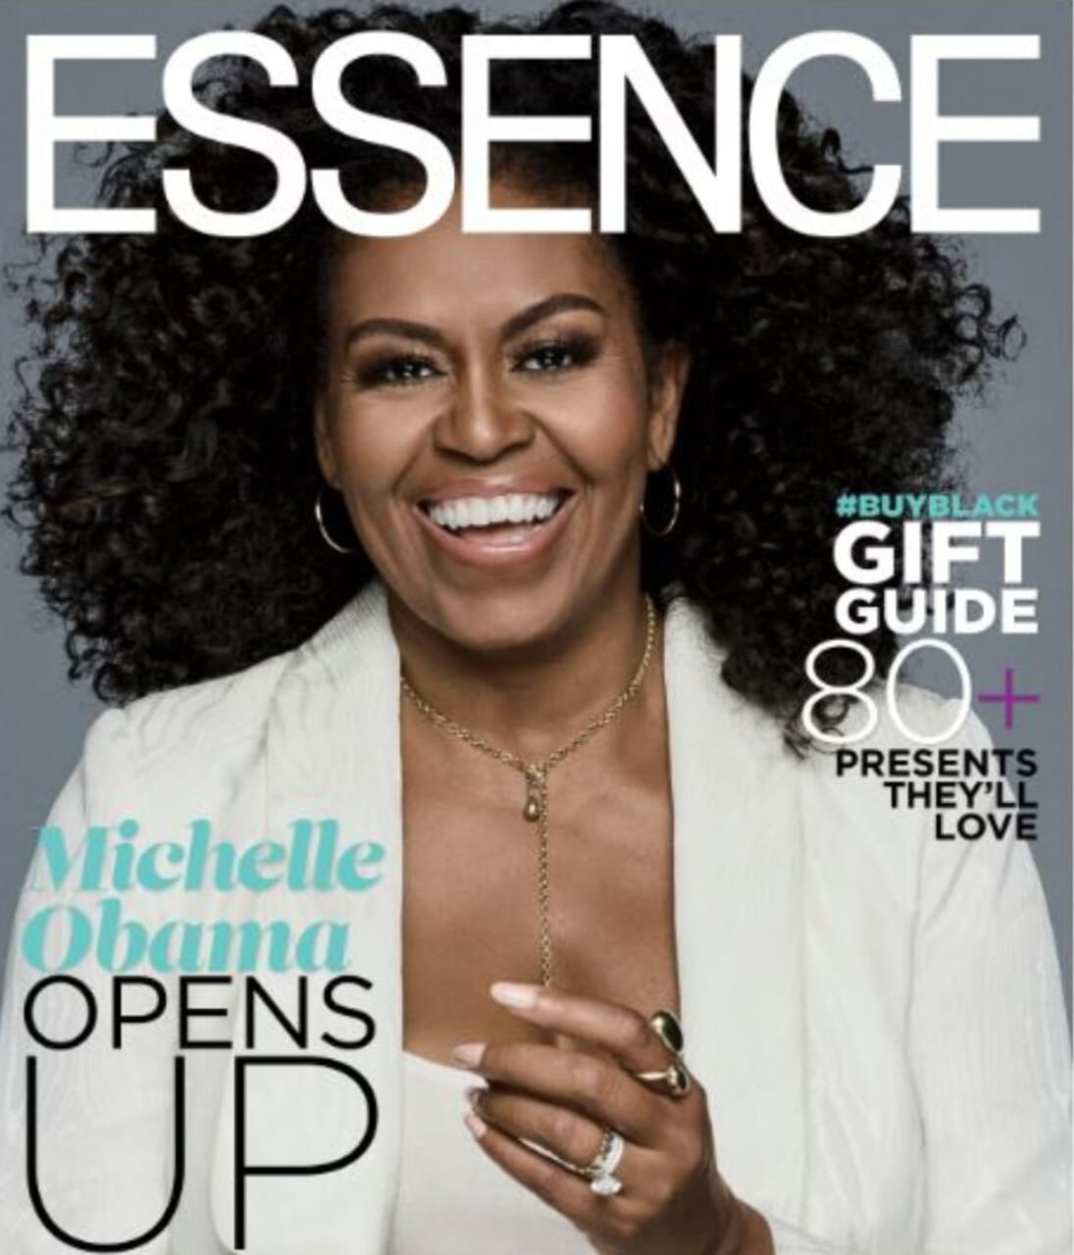 Michelle Obama Essence magazine Dec 2018/Jan 2019 cover thegrio.com